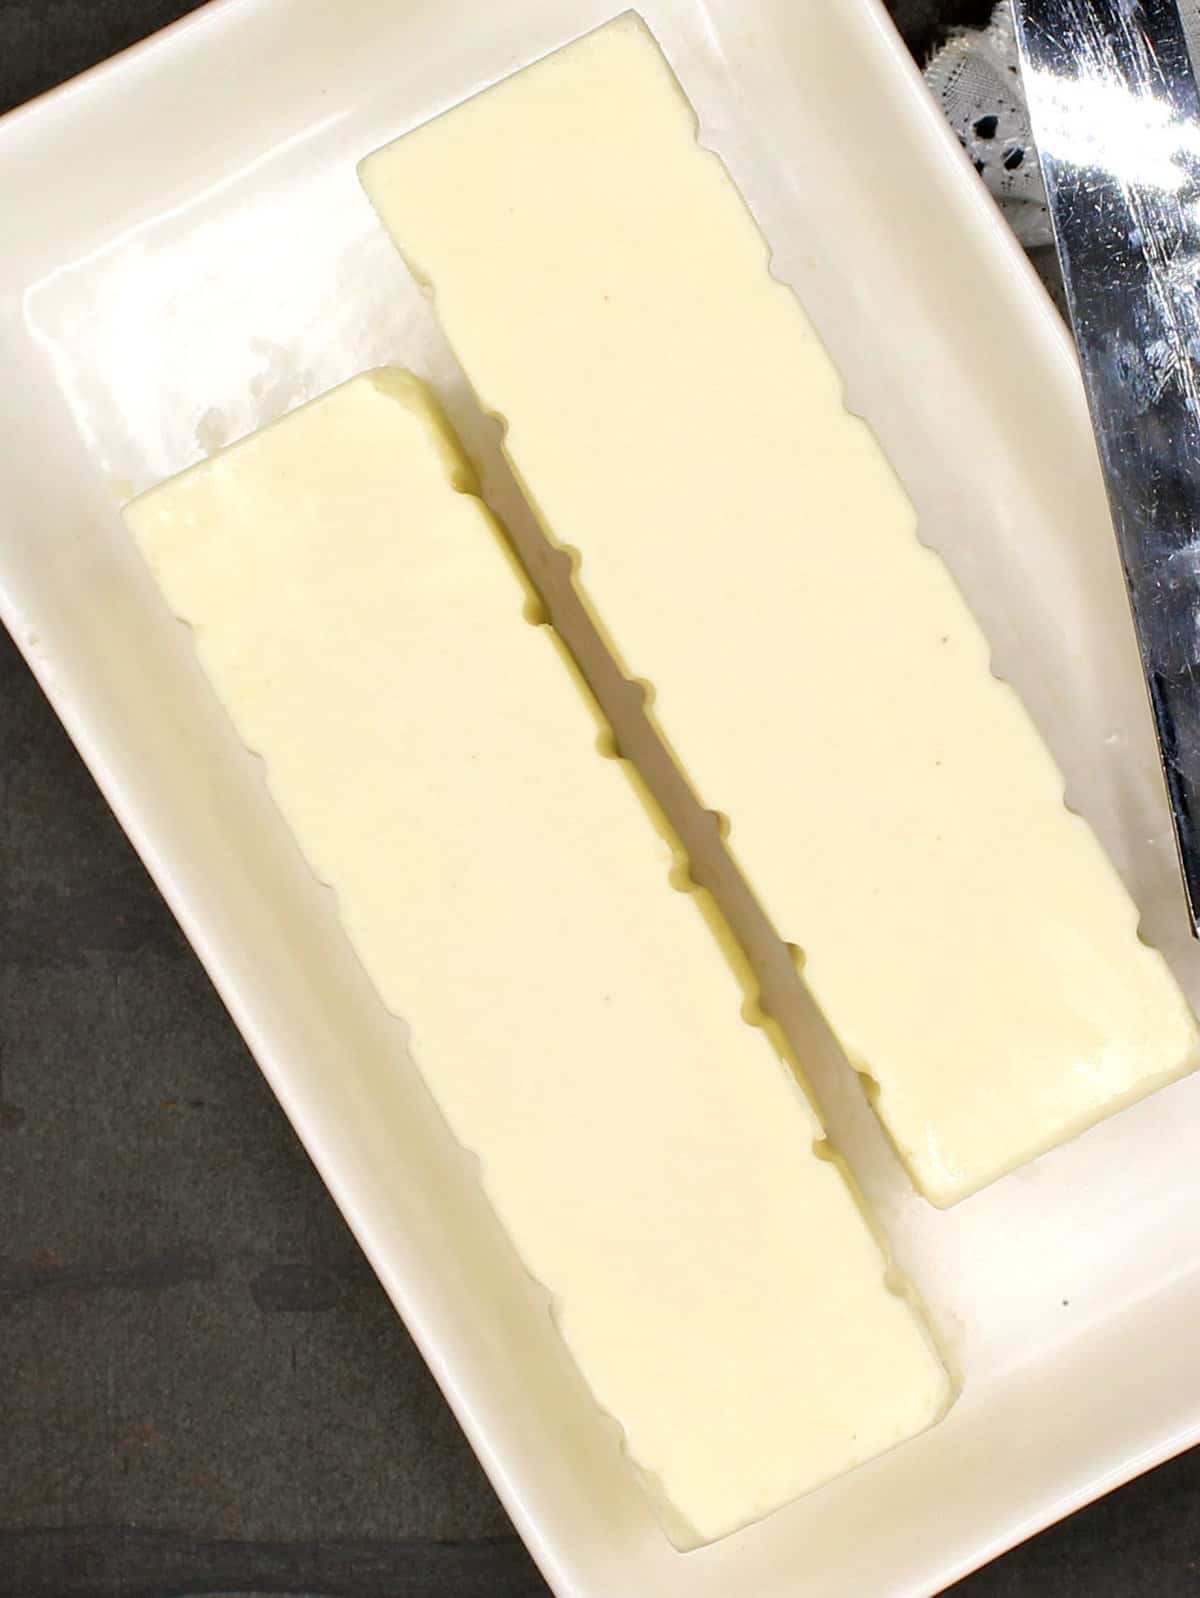 Vegan butter sticks to butter dishes.